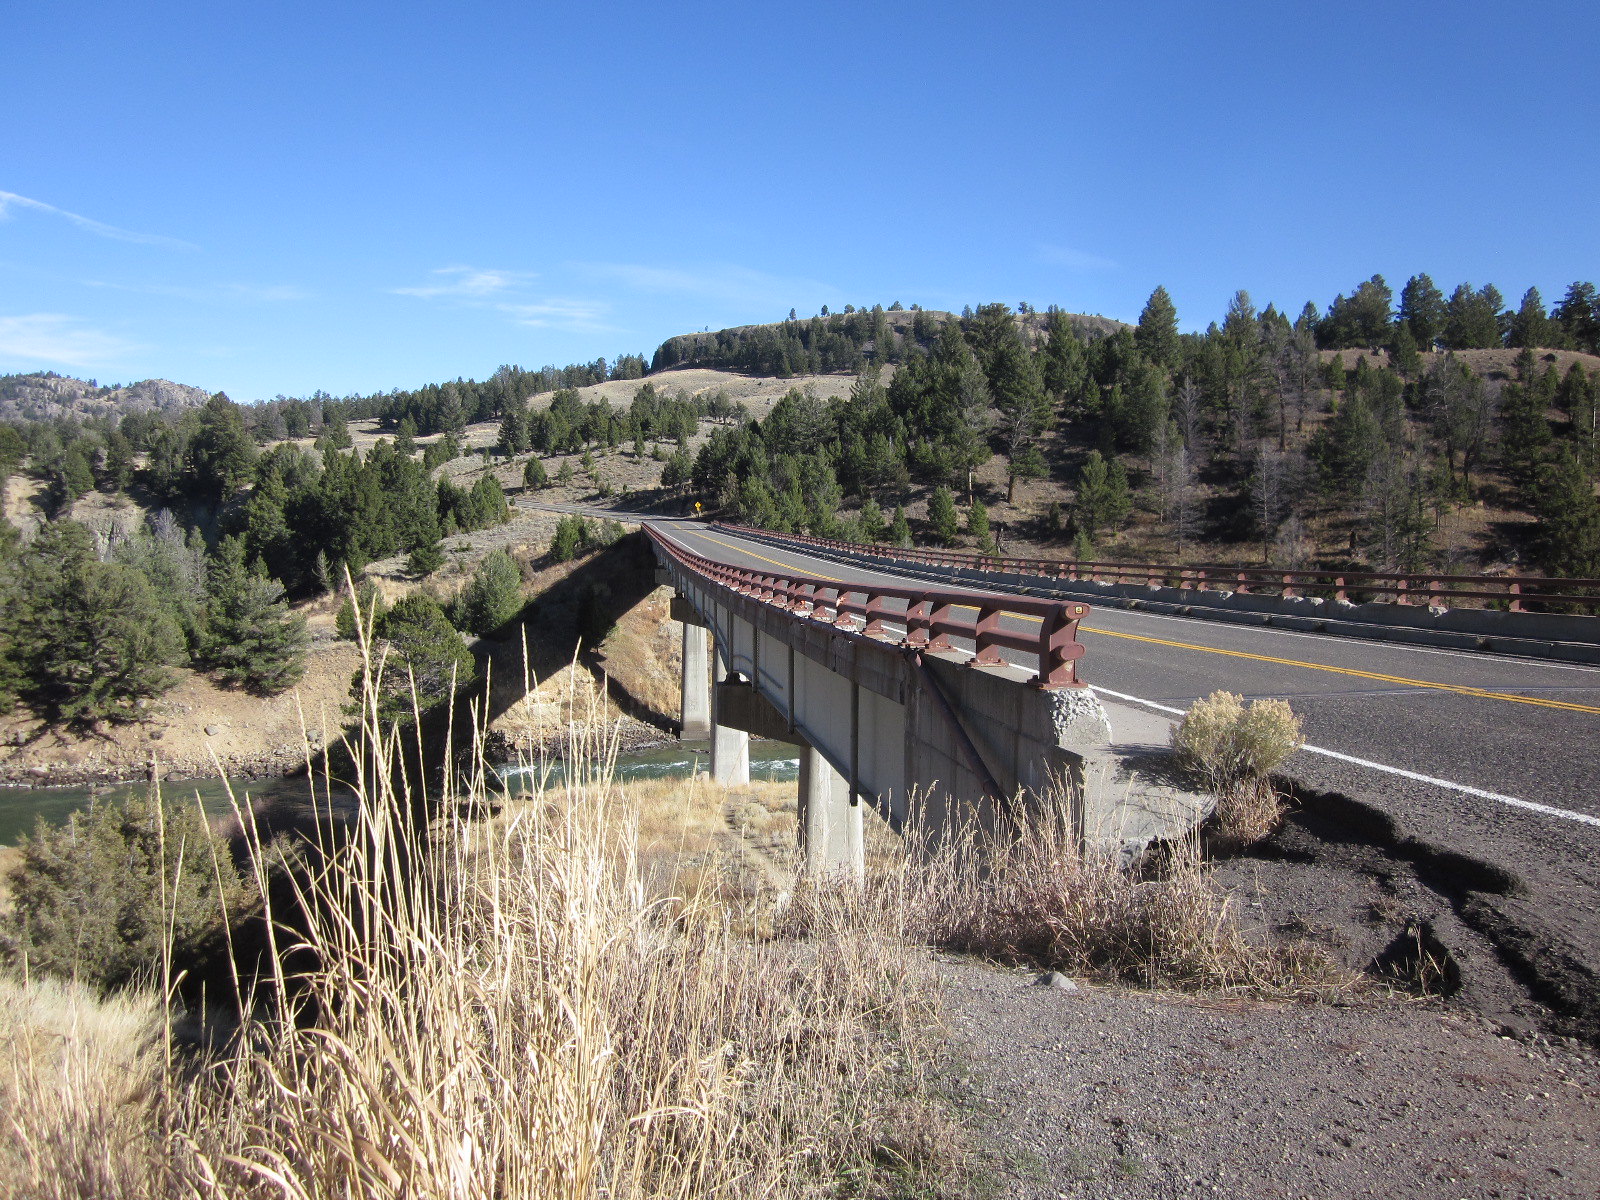 Yellowstone River Bridge showing deterioration